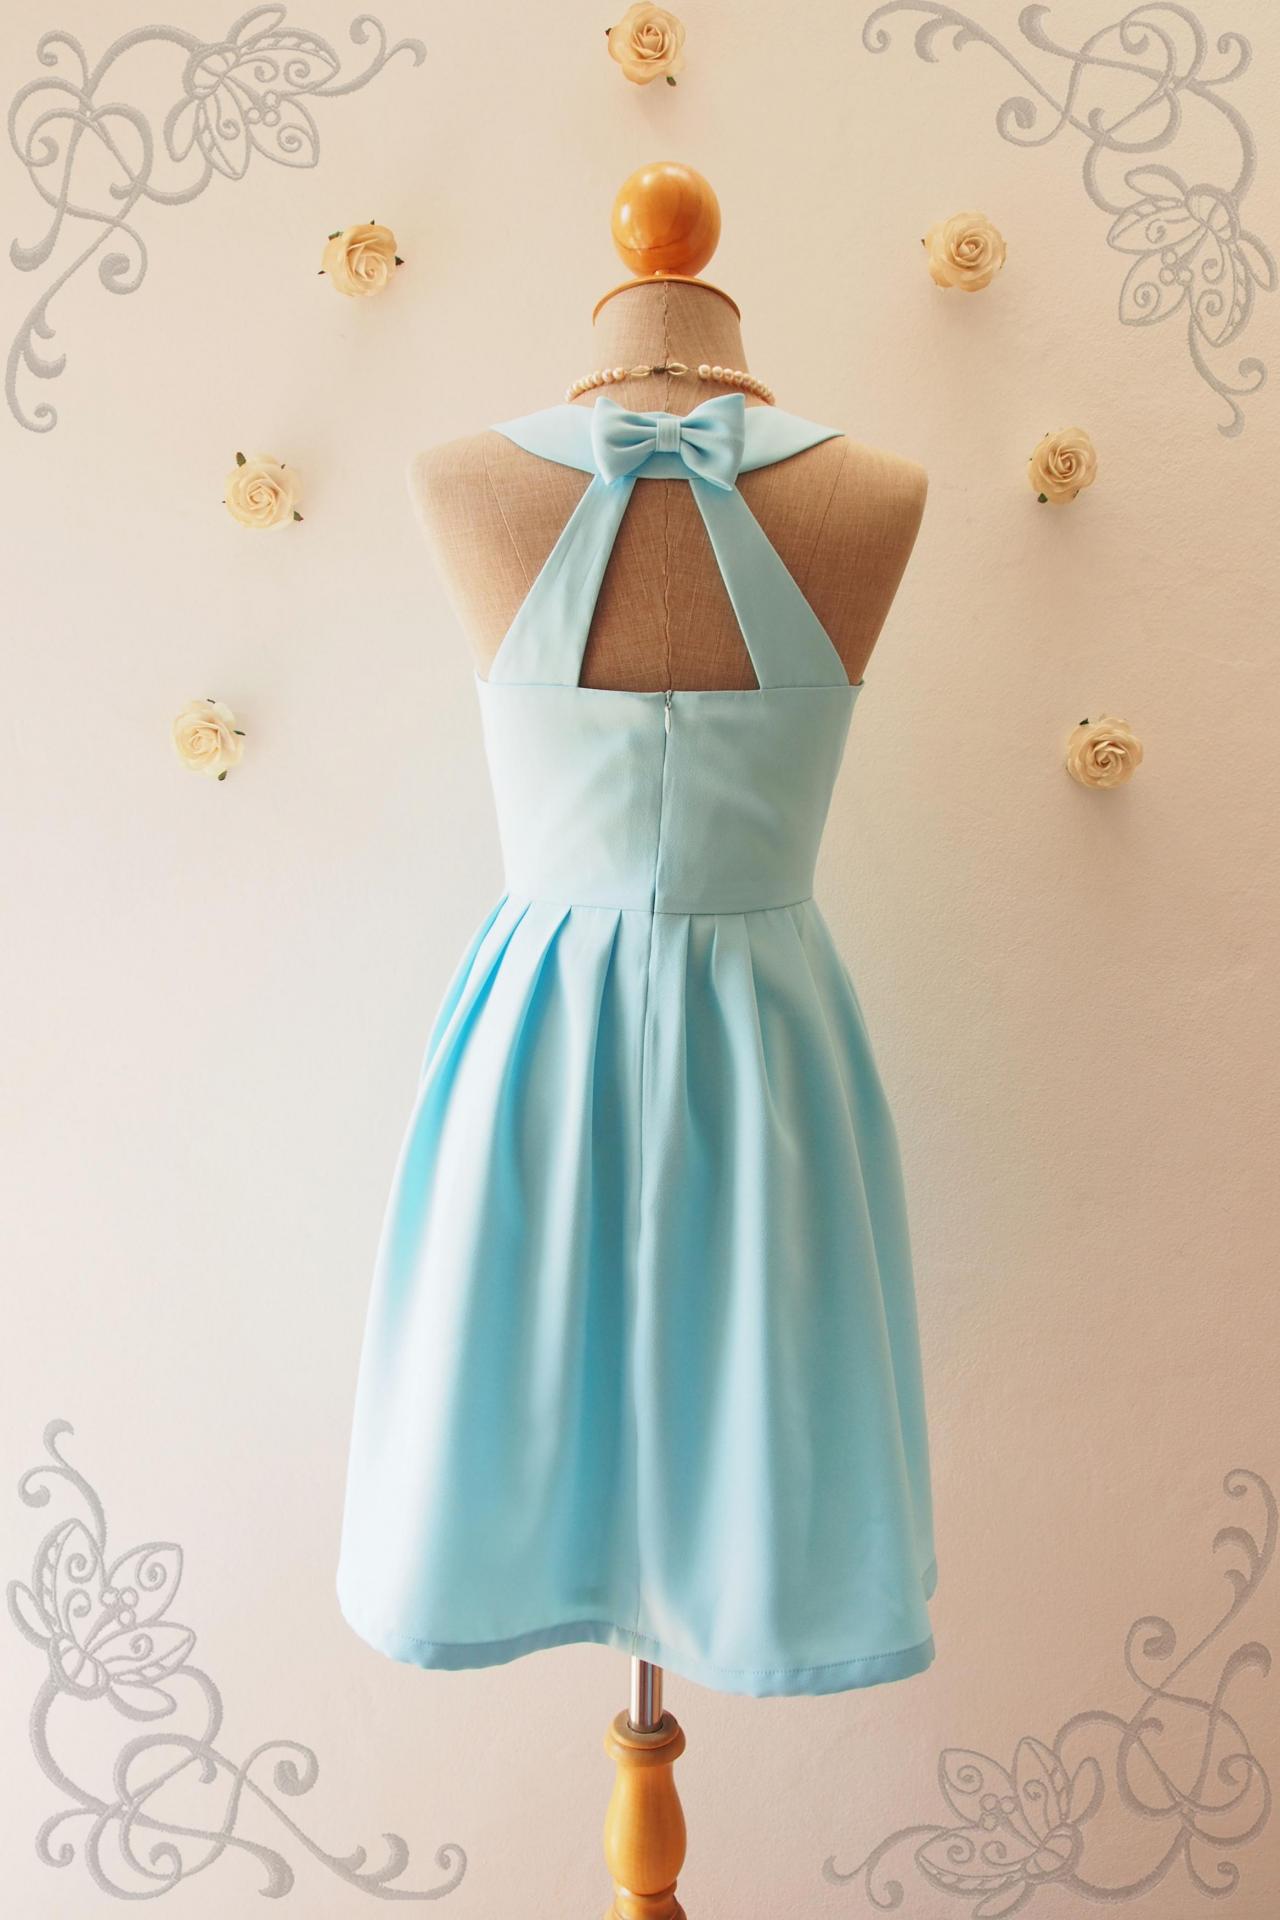 LOVE POTION - Blue backless dress, Blue Bridesmaid Dress, Baby Blue Dress, Blue Party Dress, Vintage Inspired, Audrey Hepburn Dress, Skater Dress, Blue Summer Dress